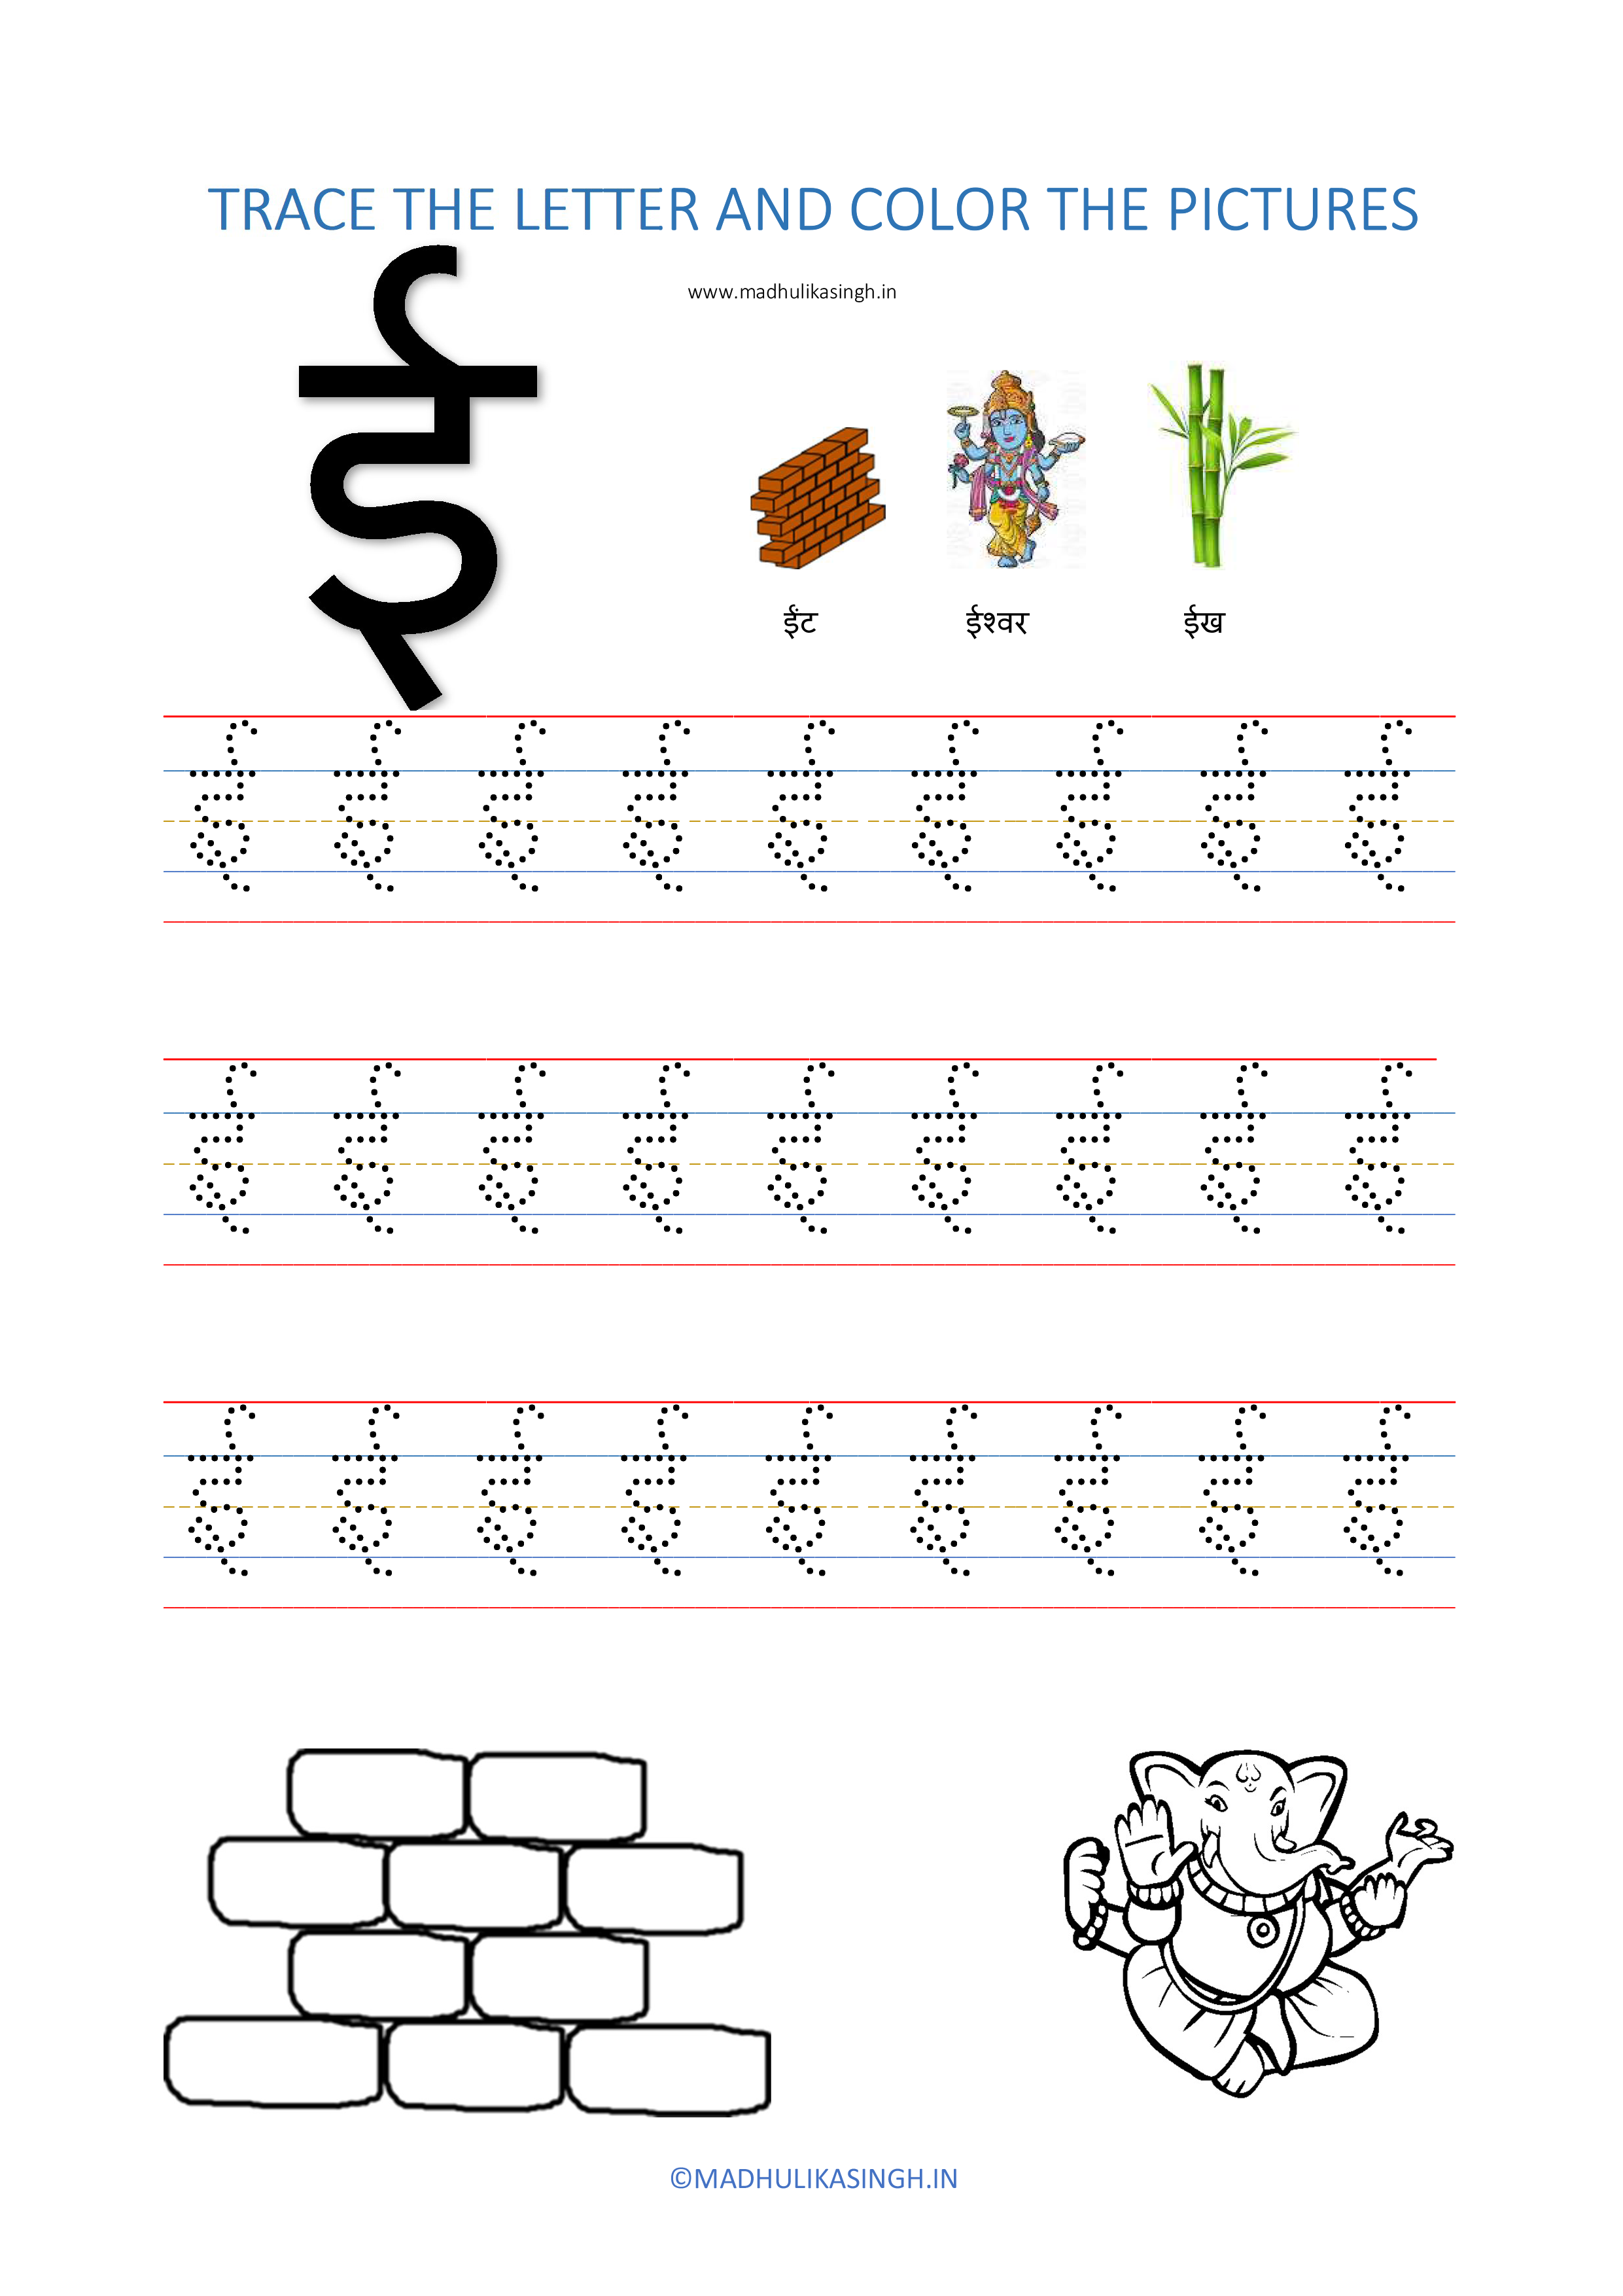 hindi alphabet tracing worksheets printable pdf a to ja nia 56 pages free preschool